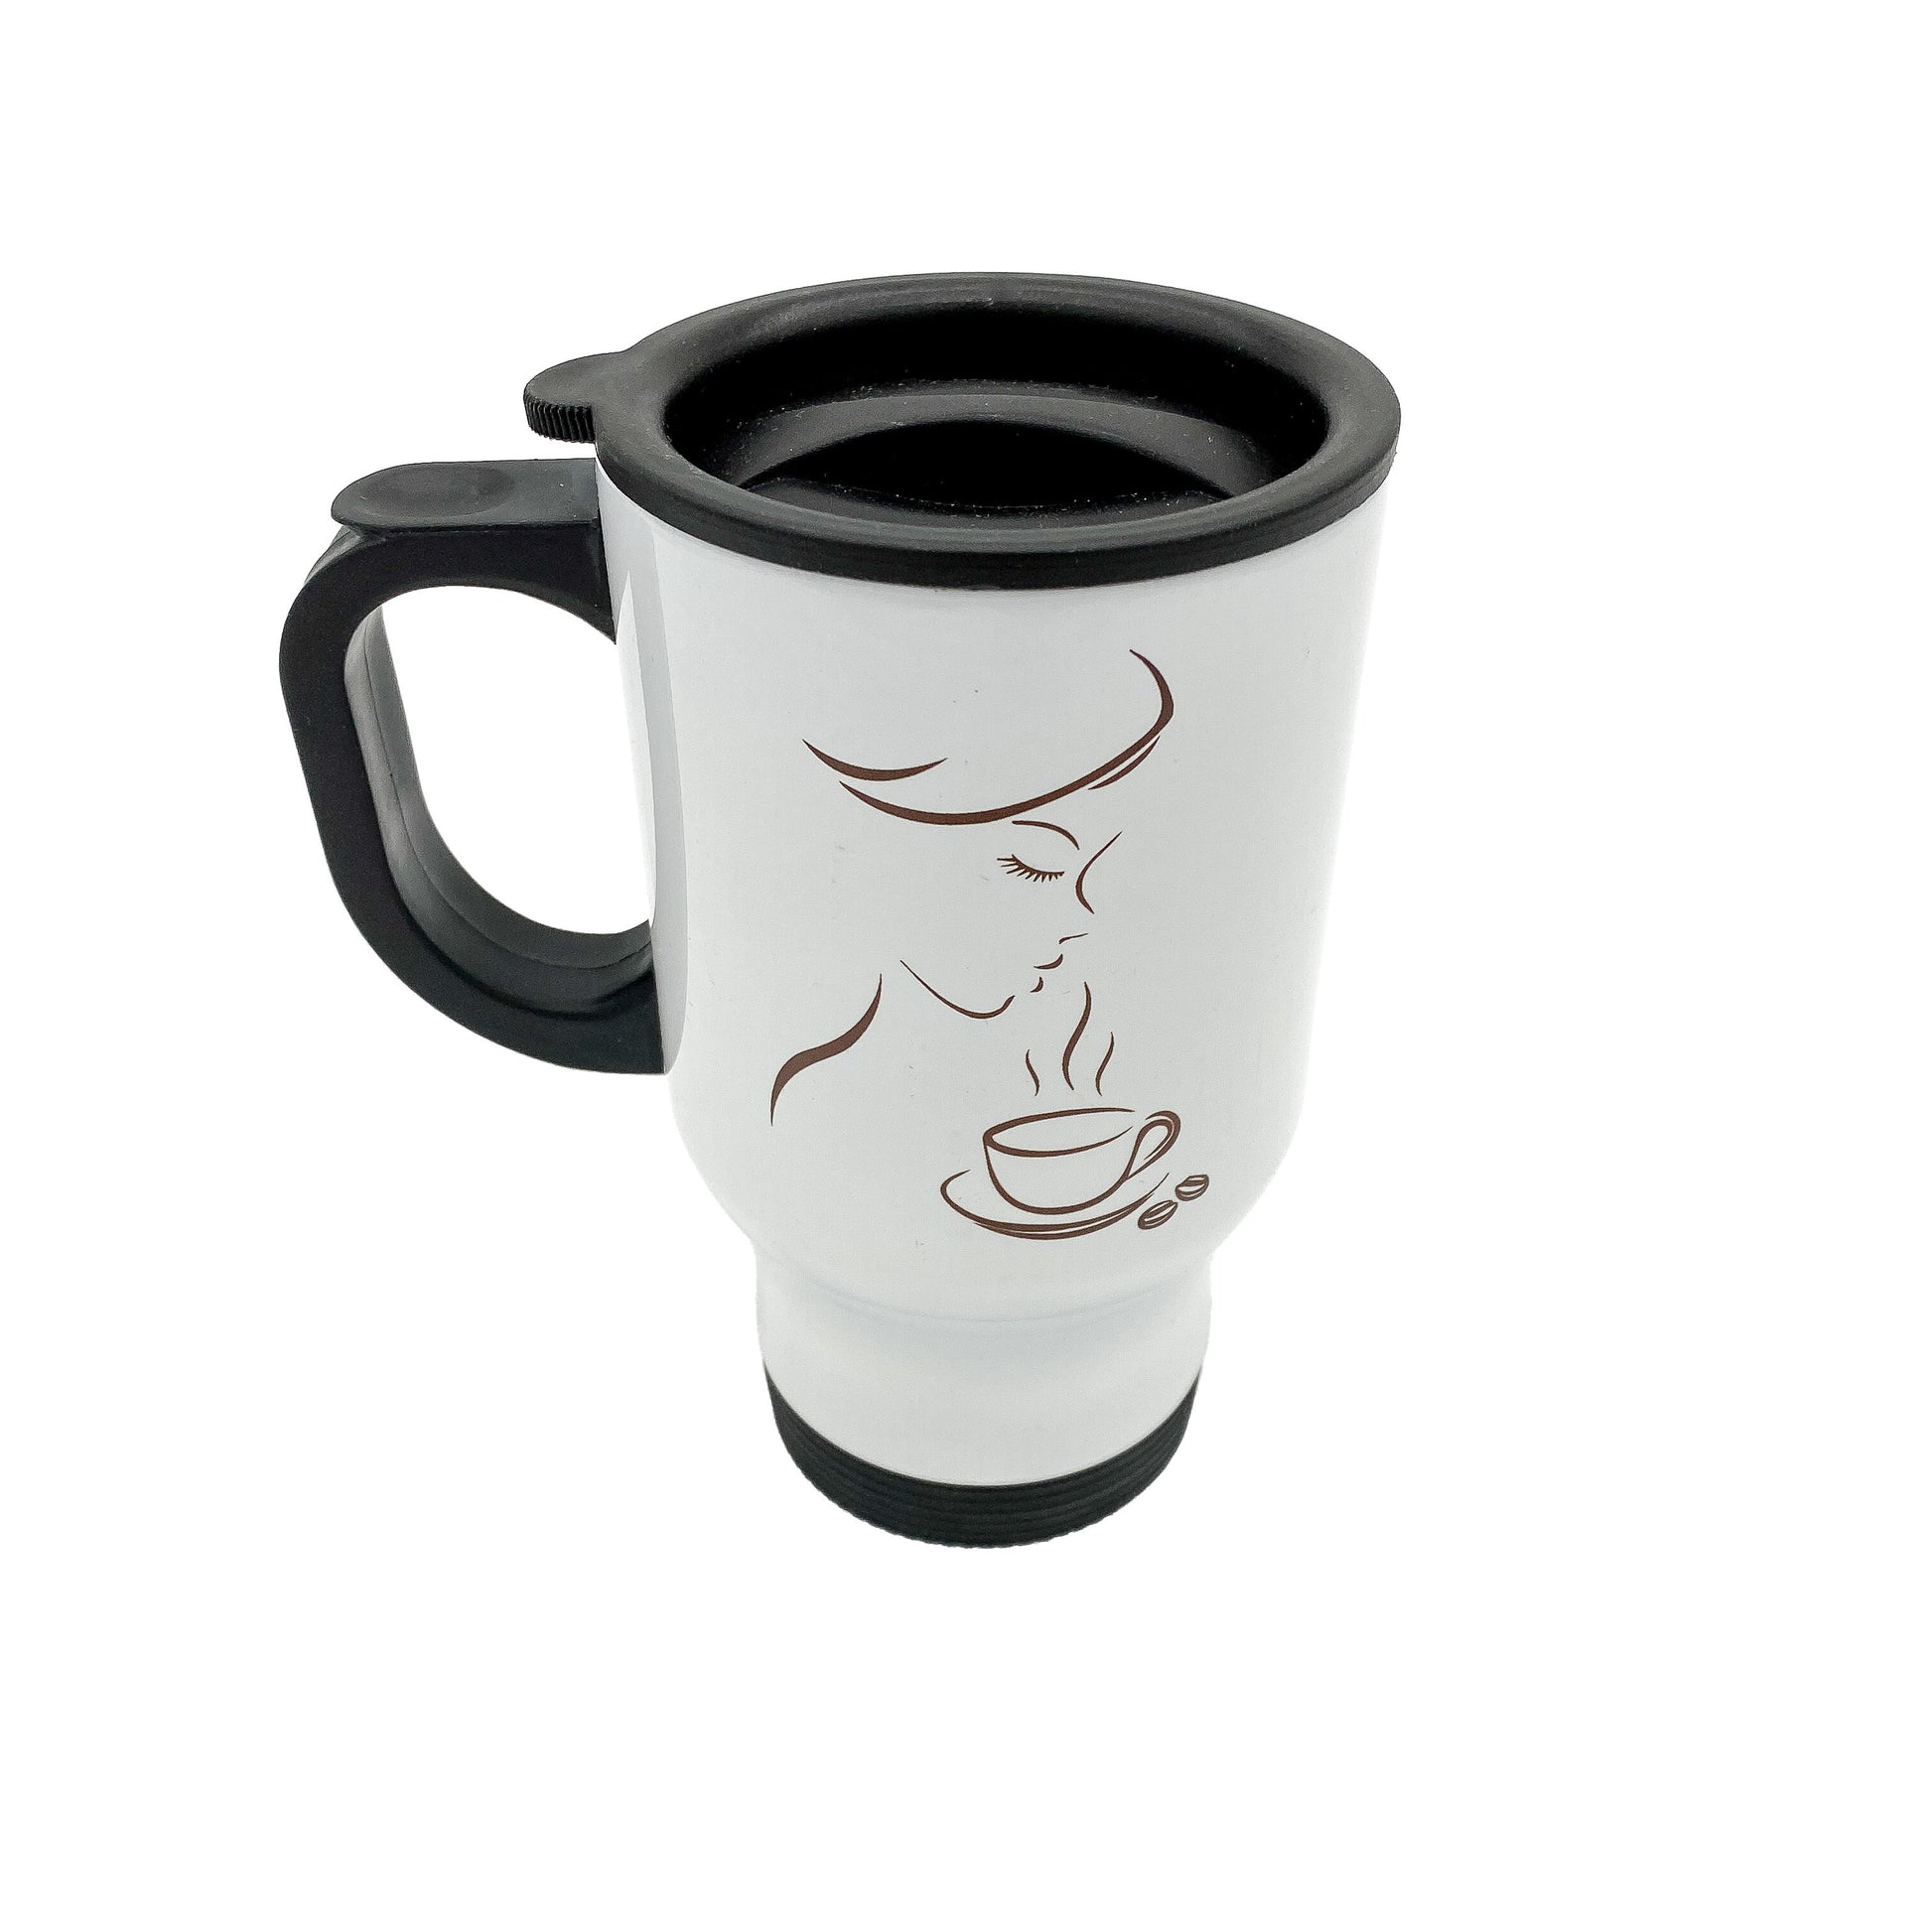 Travel mug with redemption roaster logo